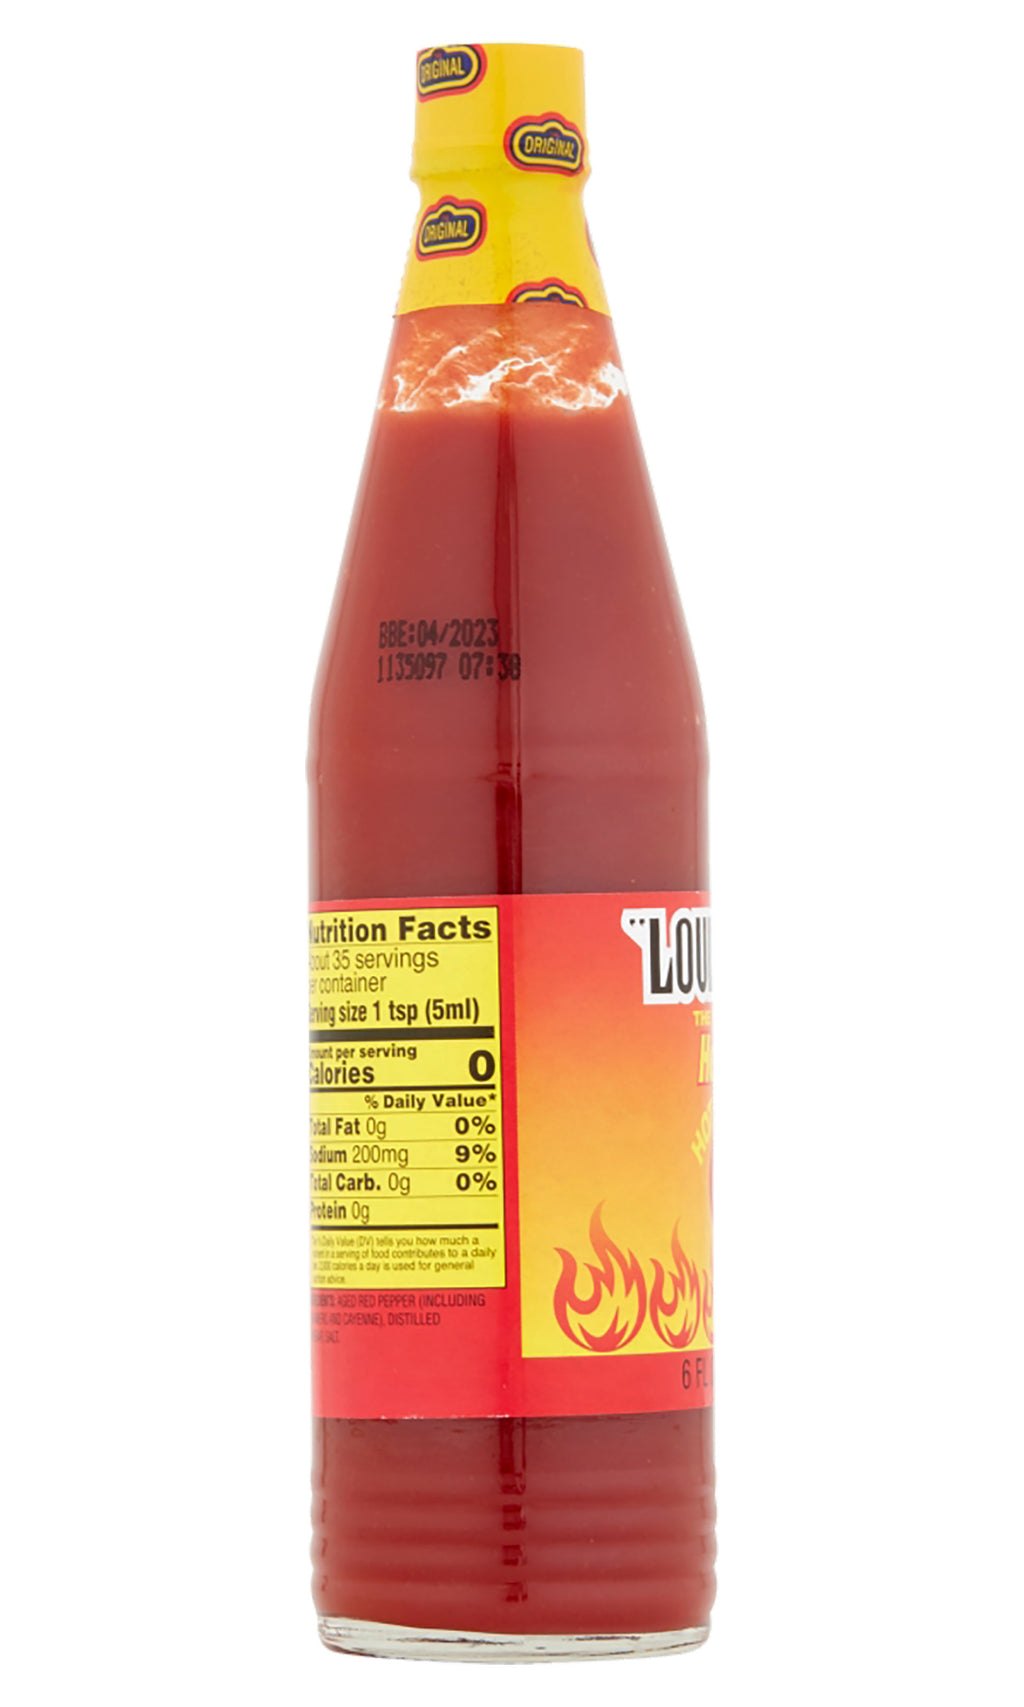 Louisiana Brand The Original Hotter Hot Sauce, 6 fl oz